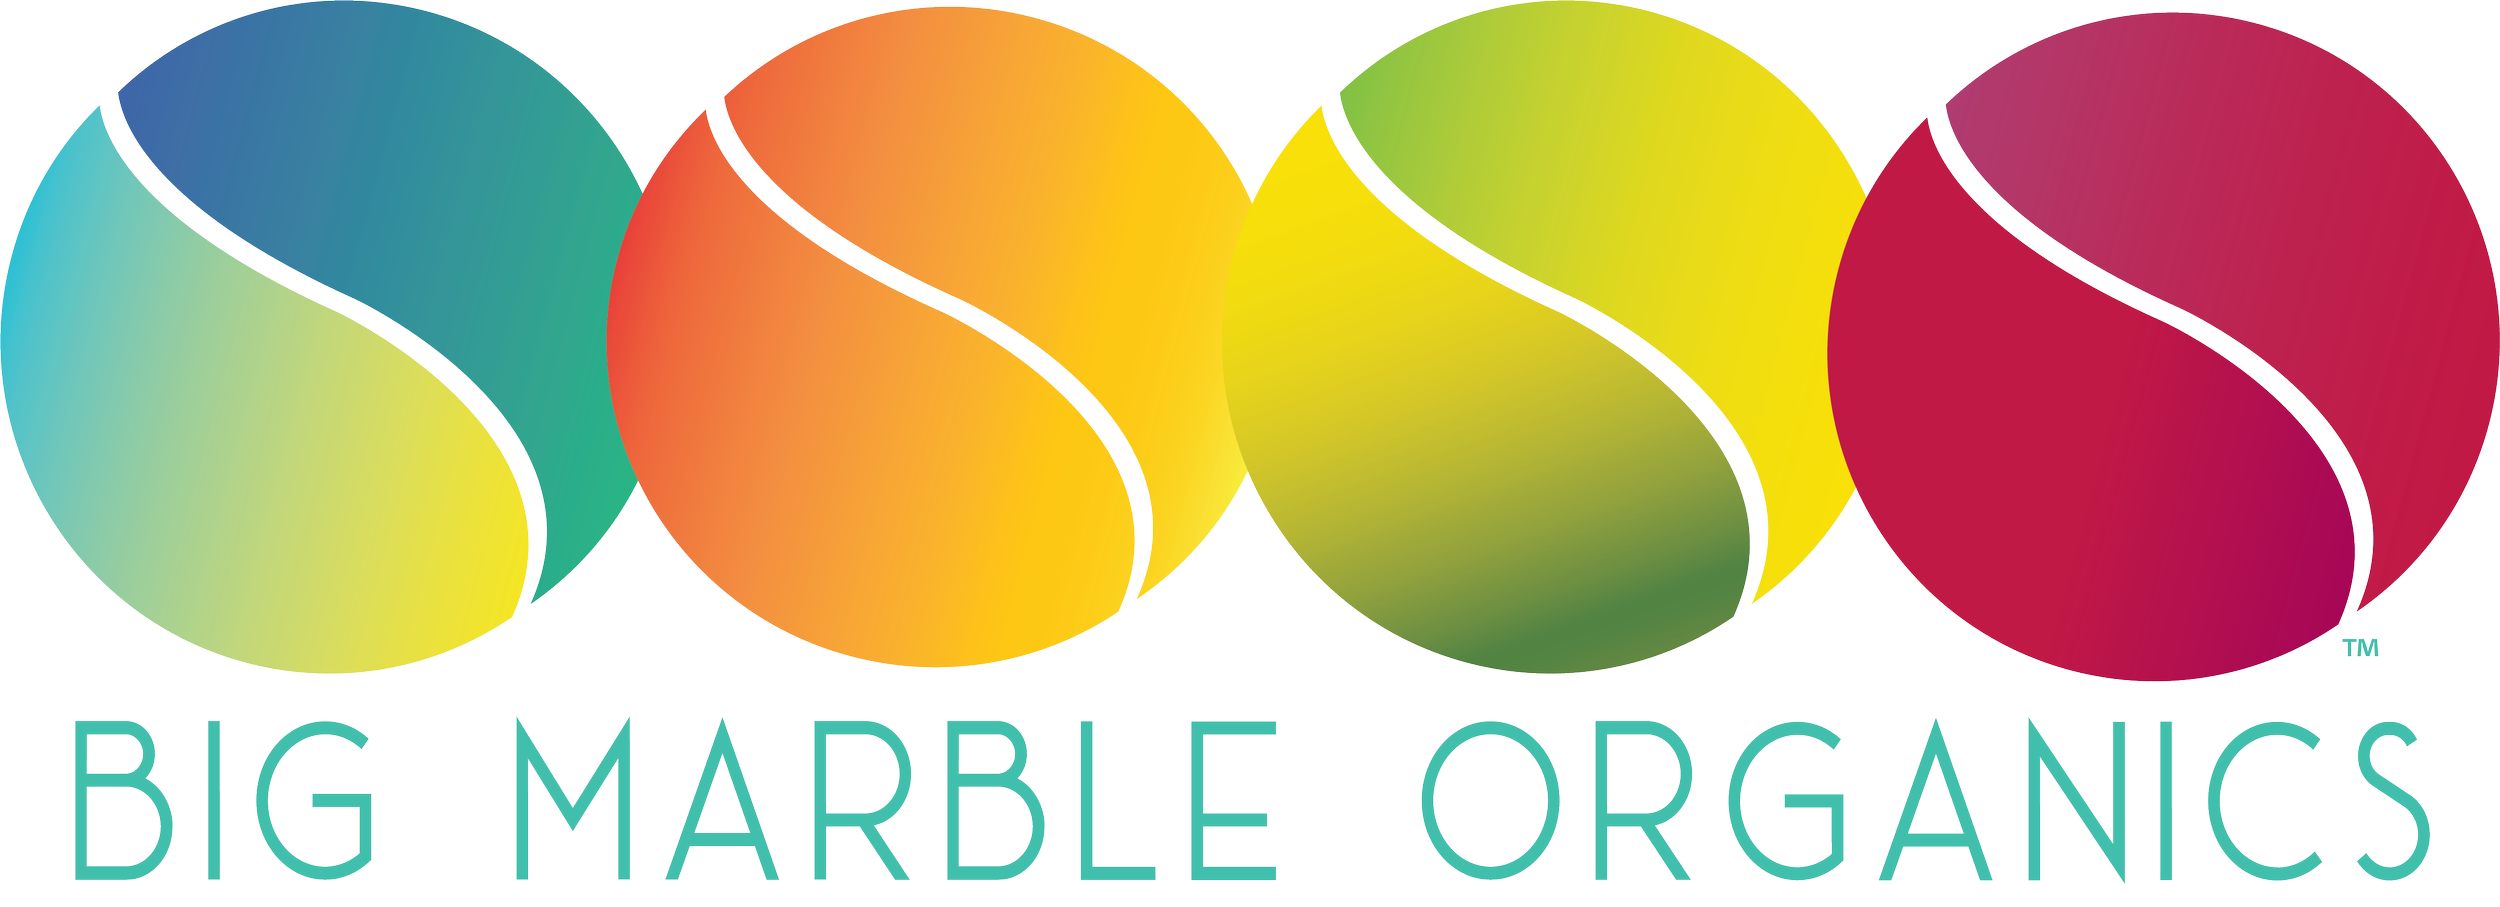 BM_4-marbles-logo - The Breadfruit.png